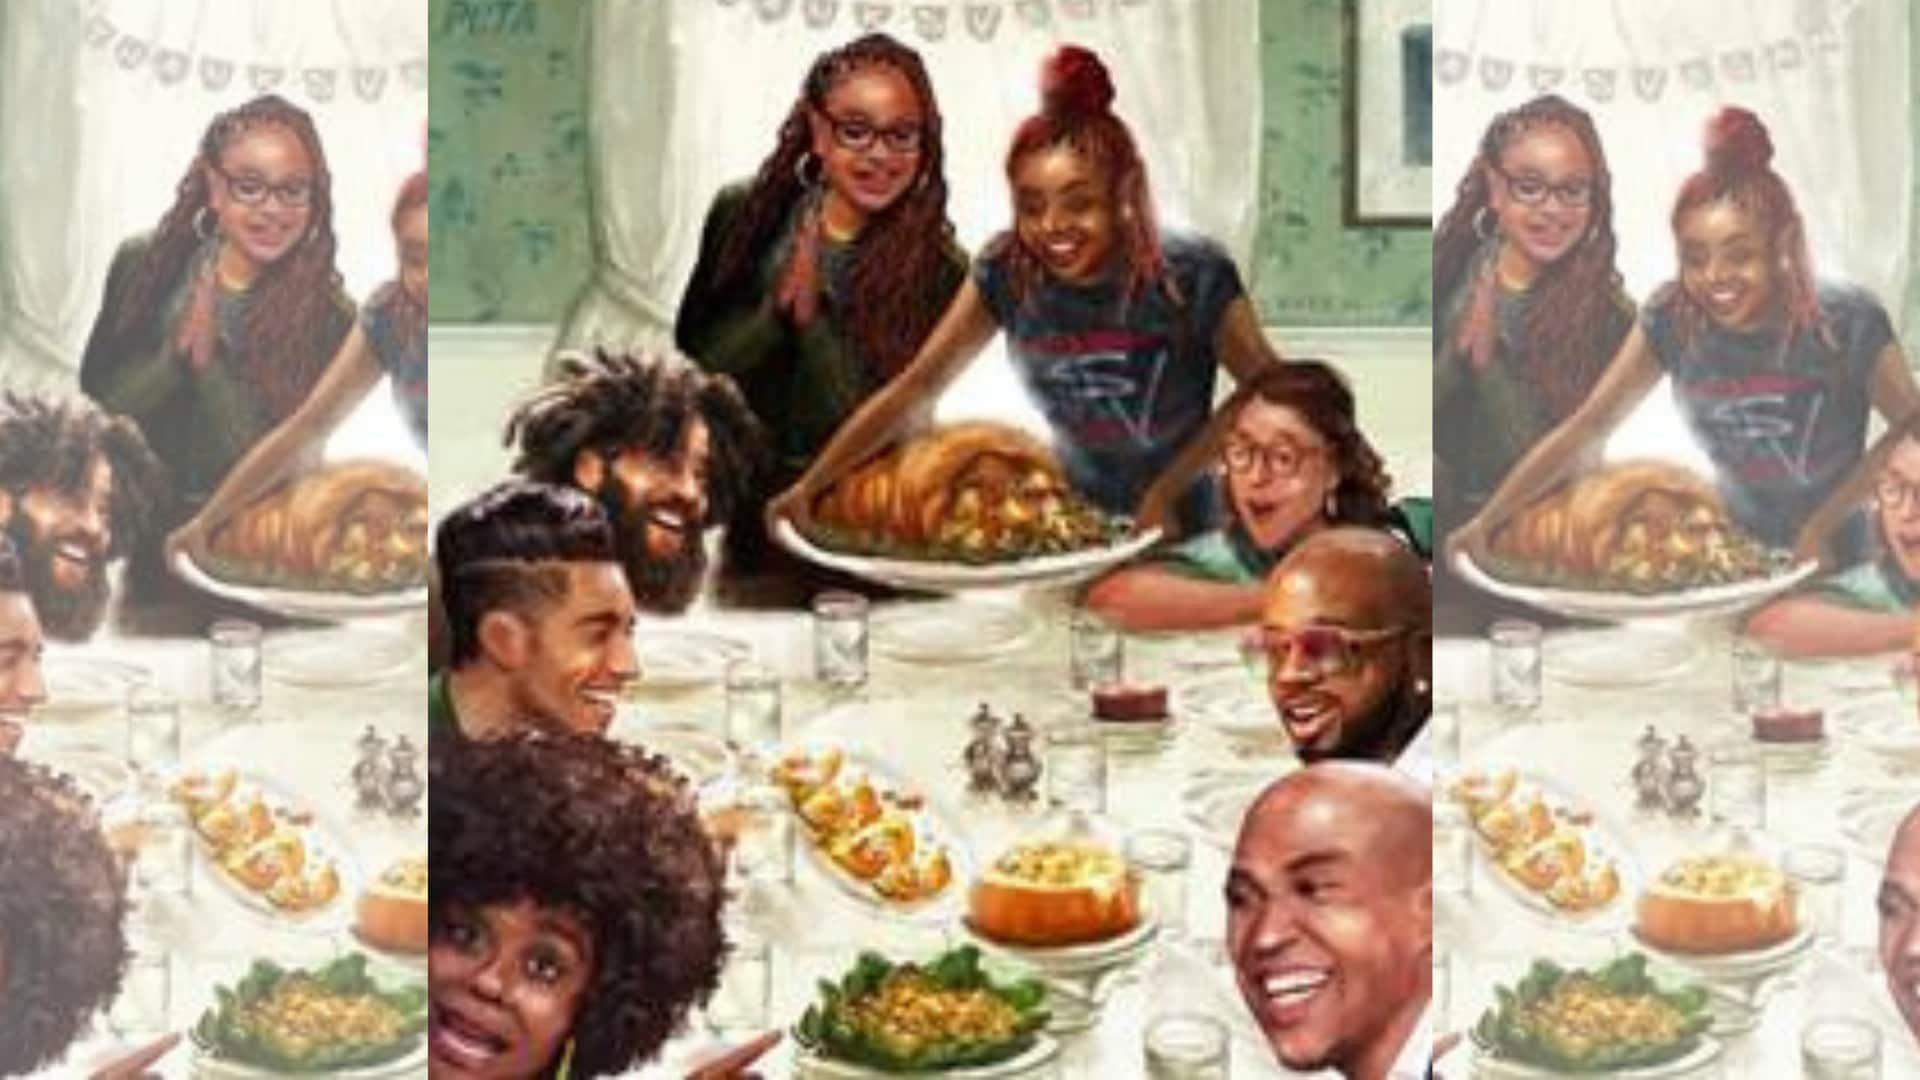 PETA reimagines famous Thanksgiving painting with vegan celebrities